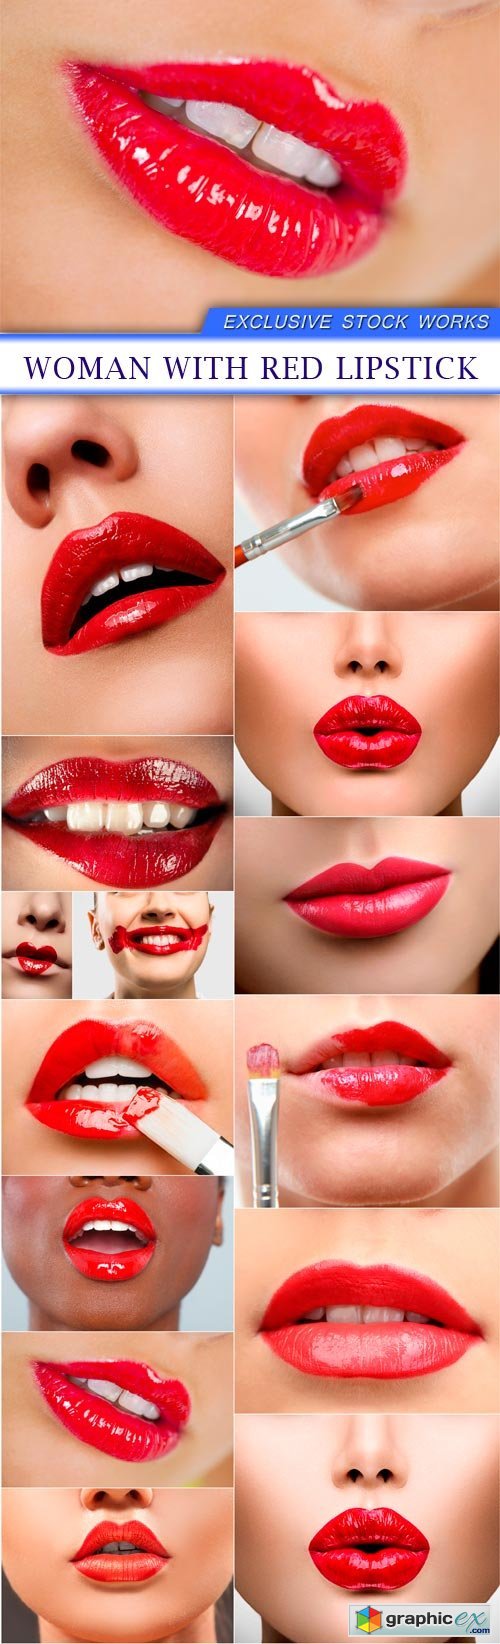 Woman with red lipstick 14X JPEG